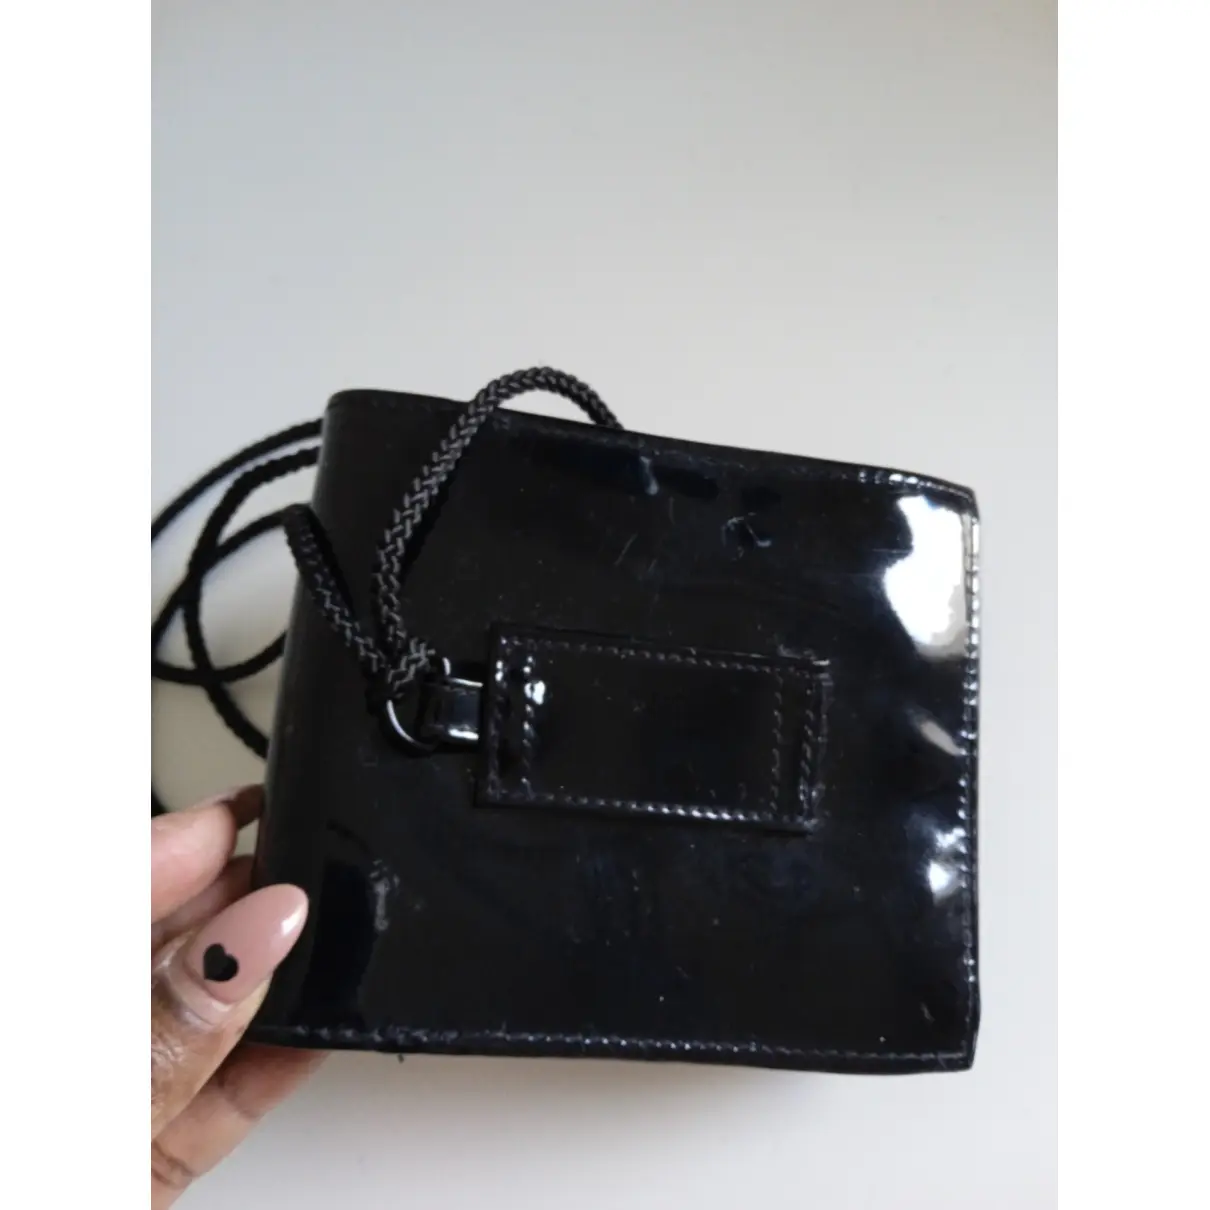 Buy Yves Saint Laurent Patent leather crossbody bag online